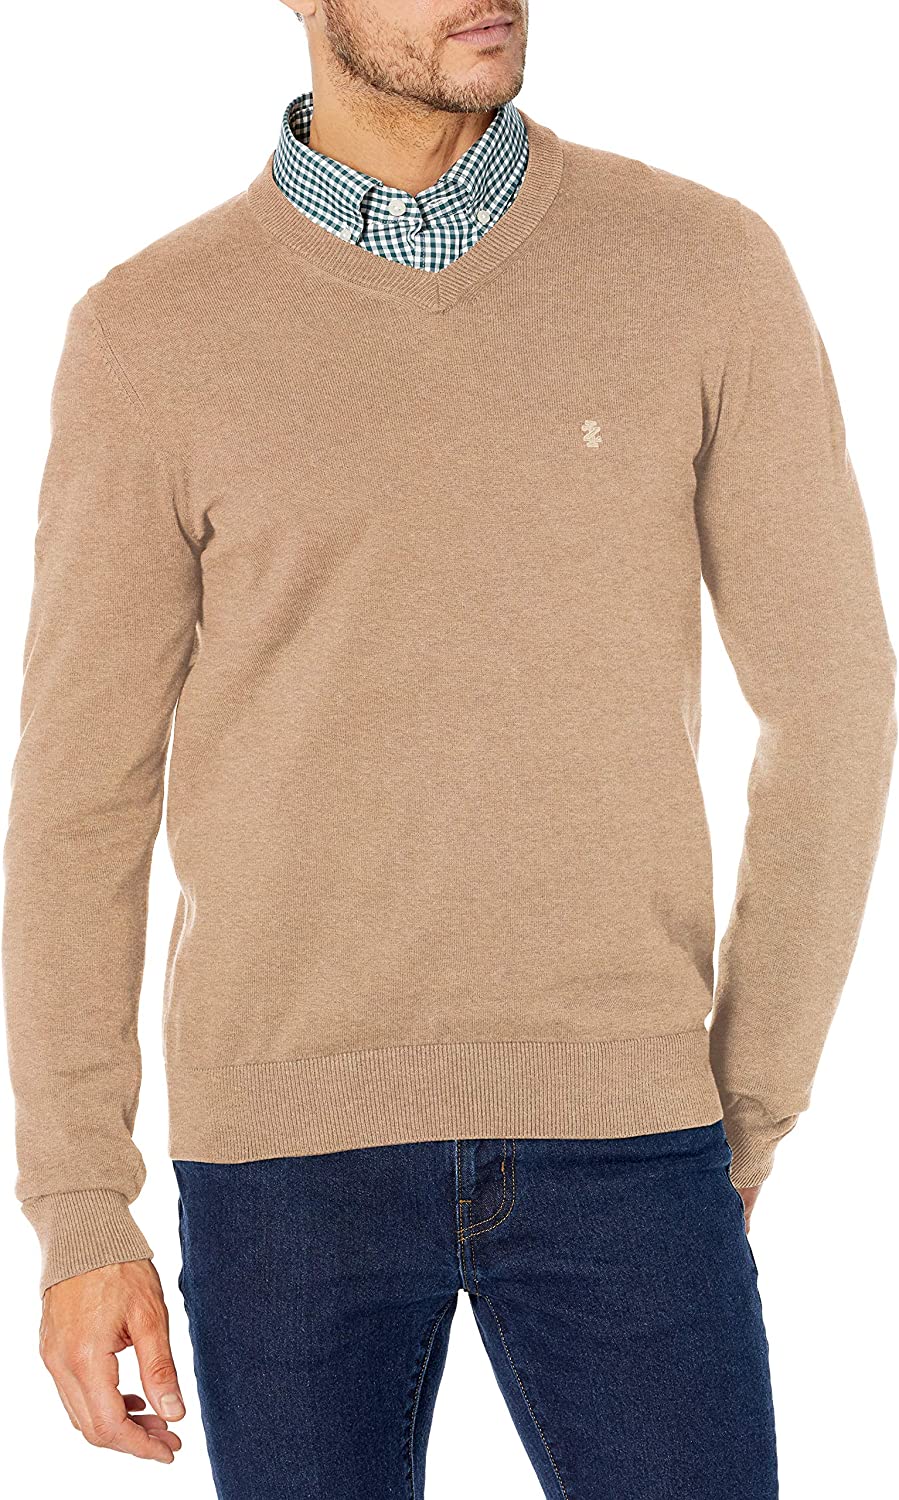 IZOD Men's Premium Essentials Solid V-Neck 12 Gauge Sweater